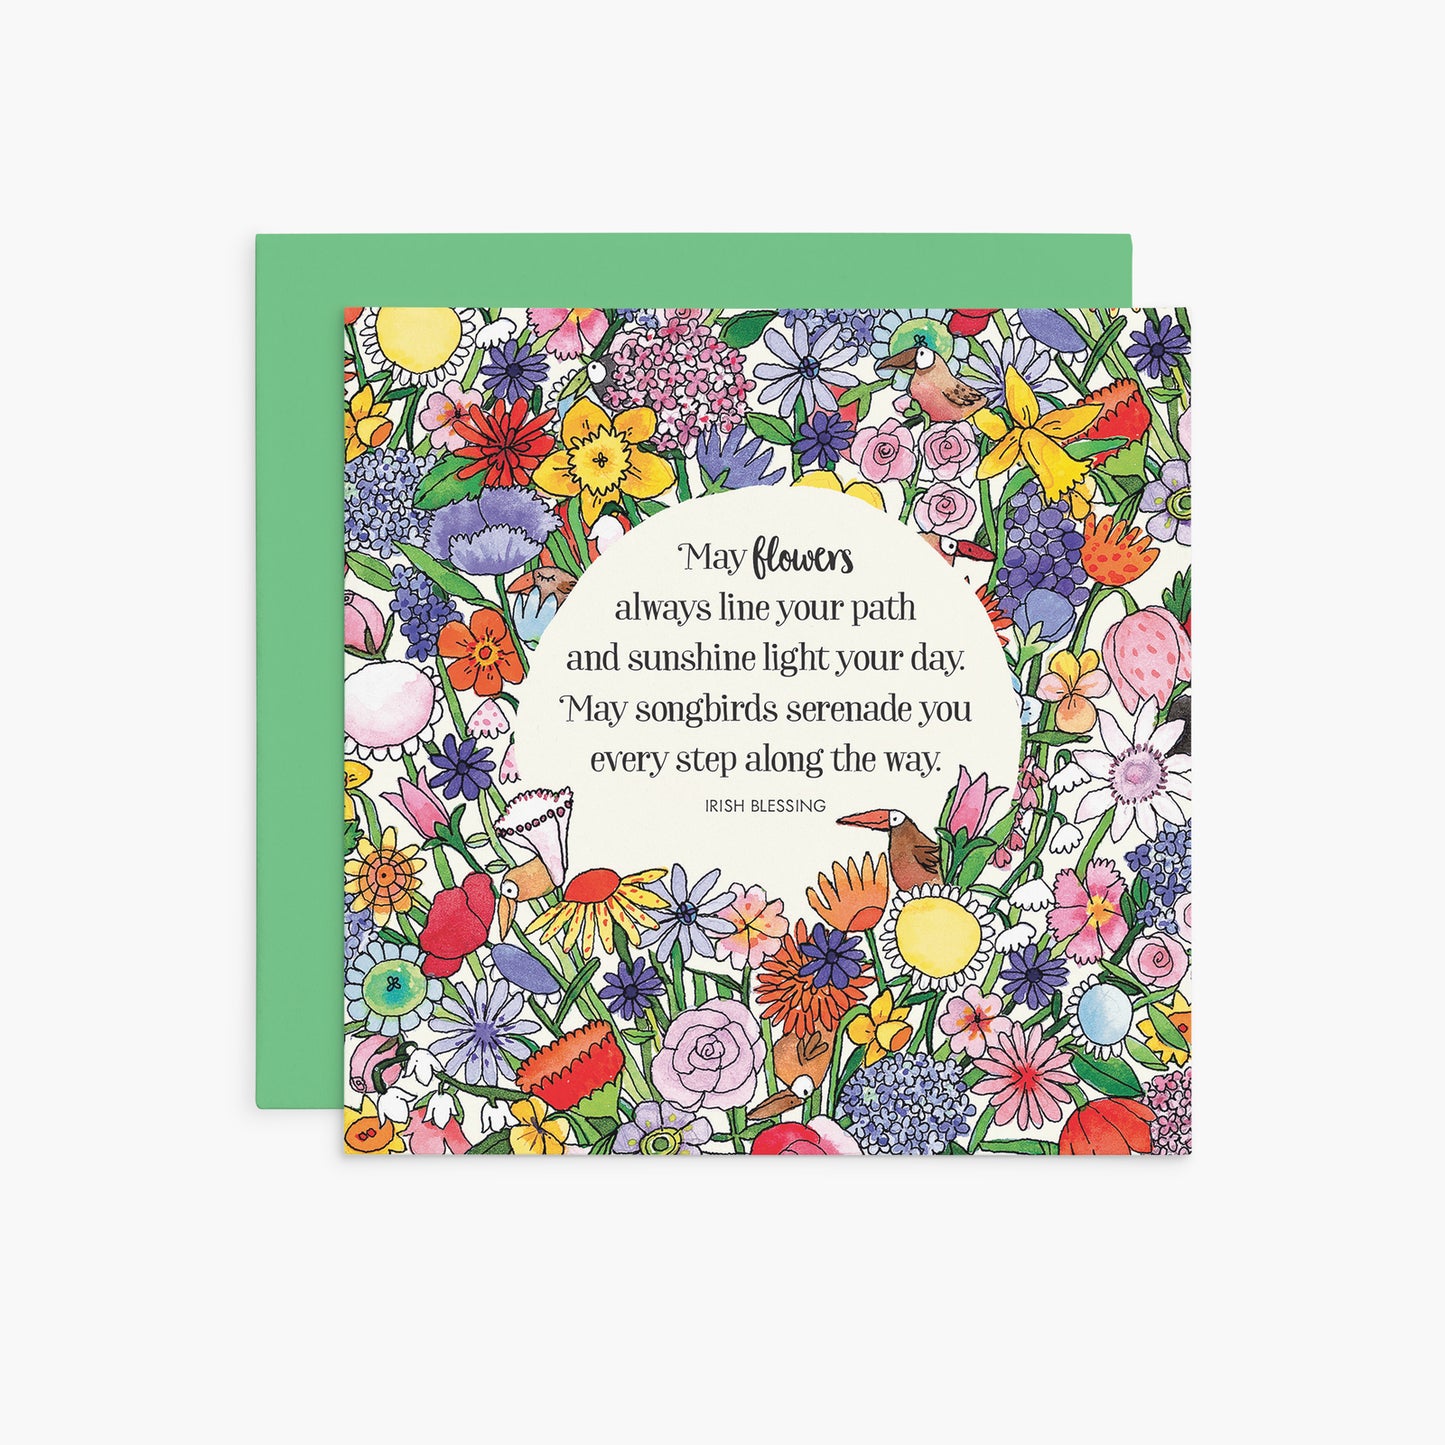 K235 - May Flowers - Twigseeds Greeting Card